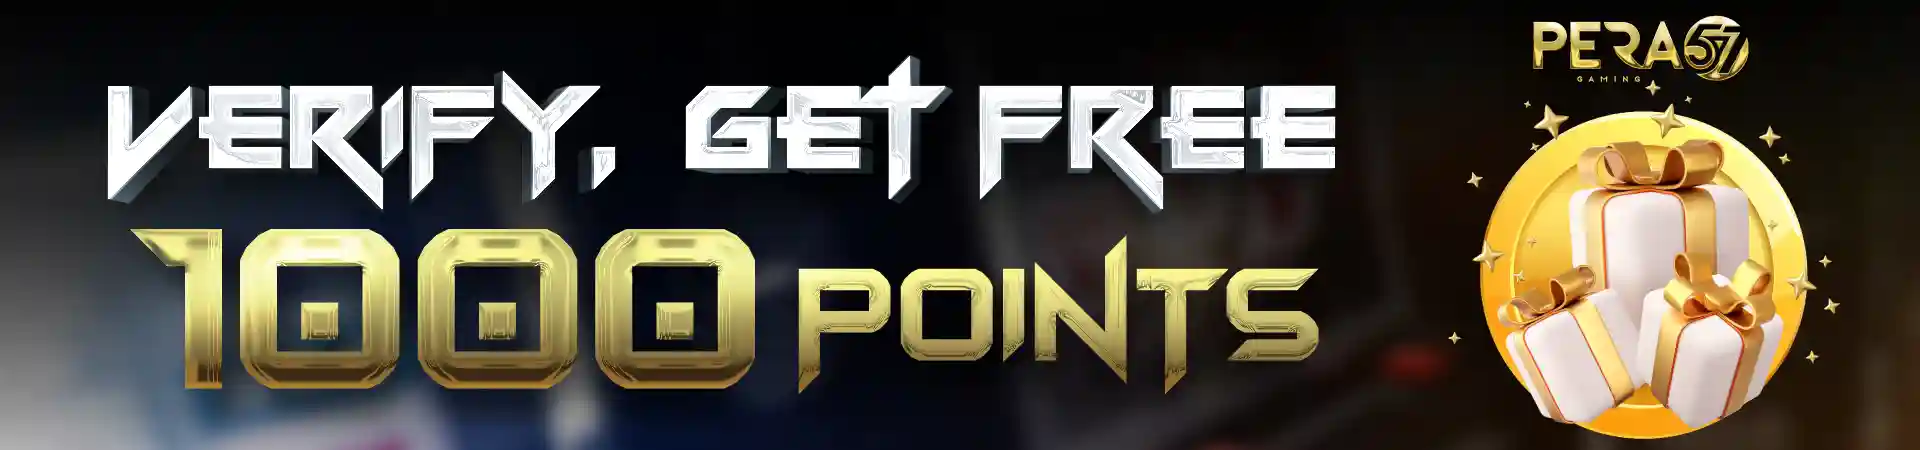 pera57 verify get 1000 points